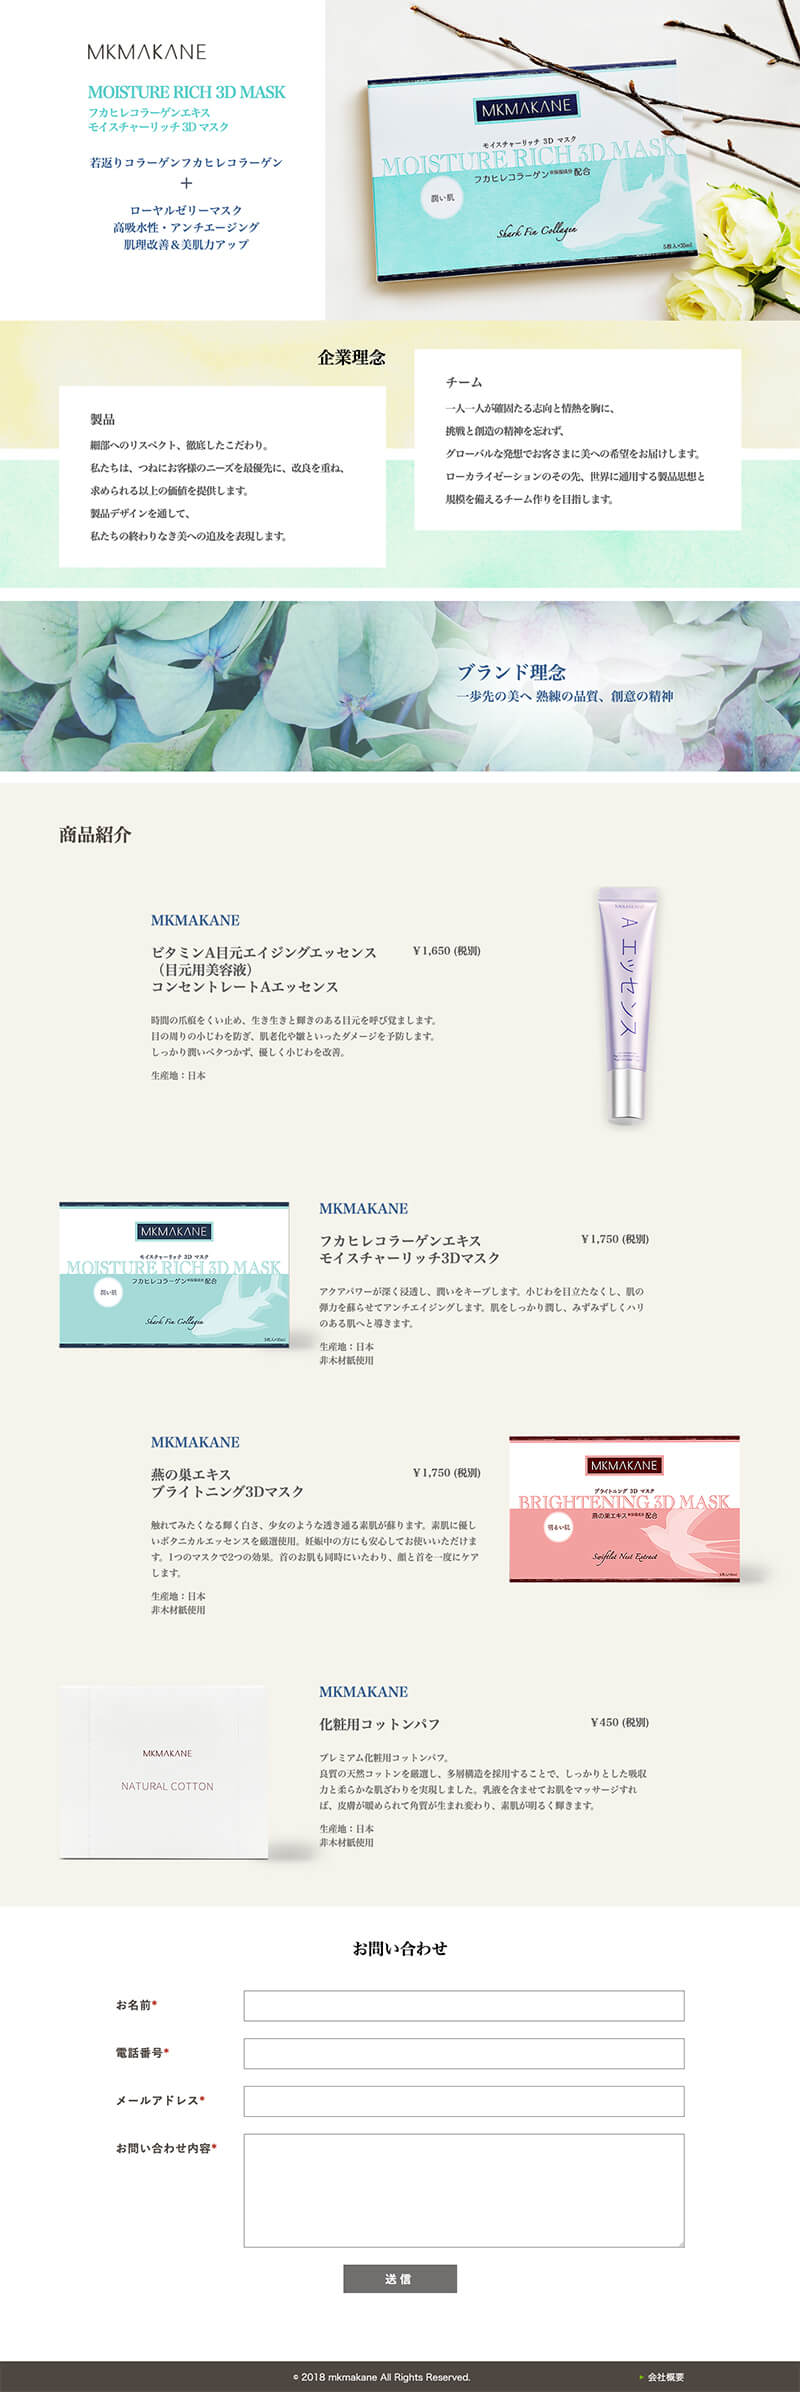 Mela (Hk) Cosmetics Limited 様 デザインイメージ